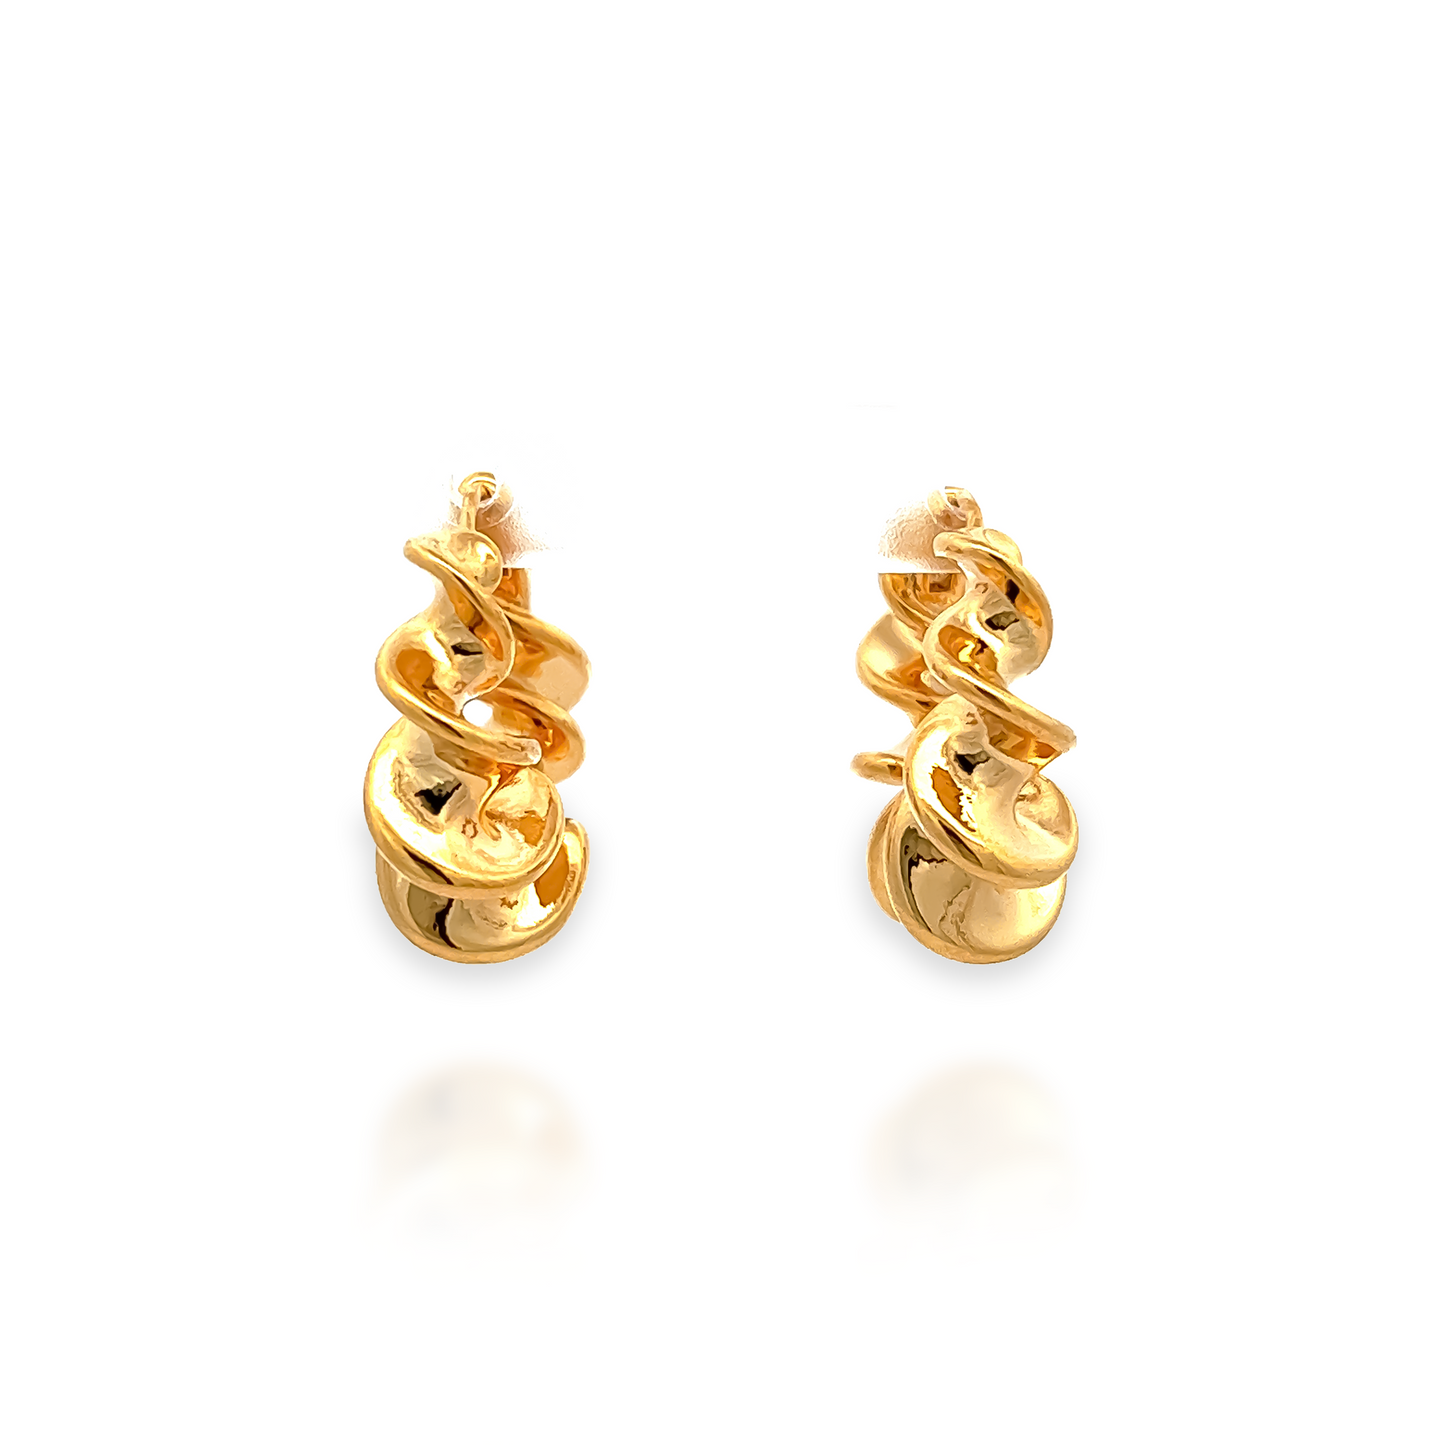 Spiral Hoops Earrings in Gold